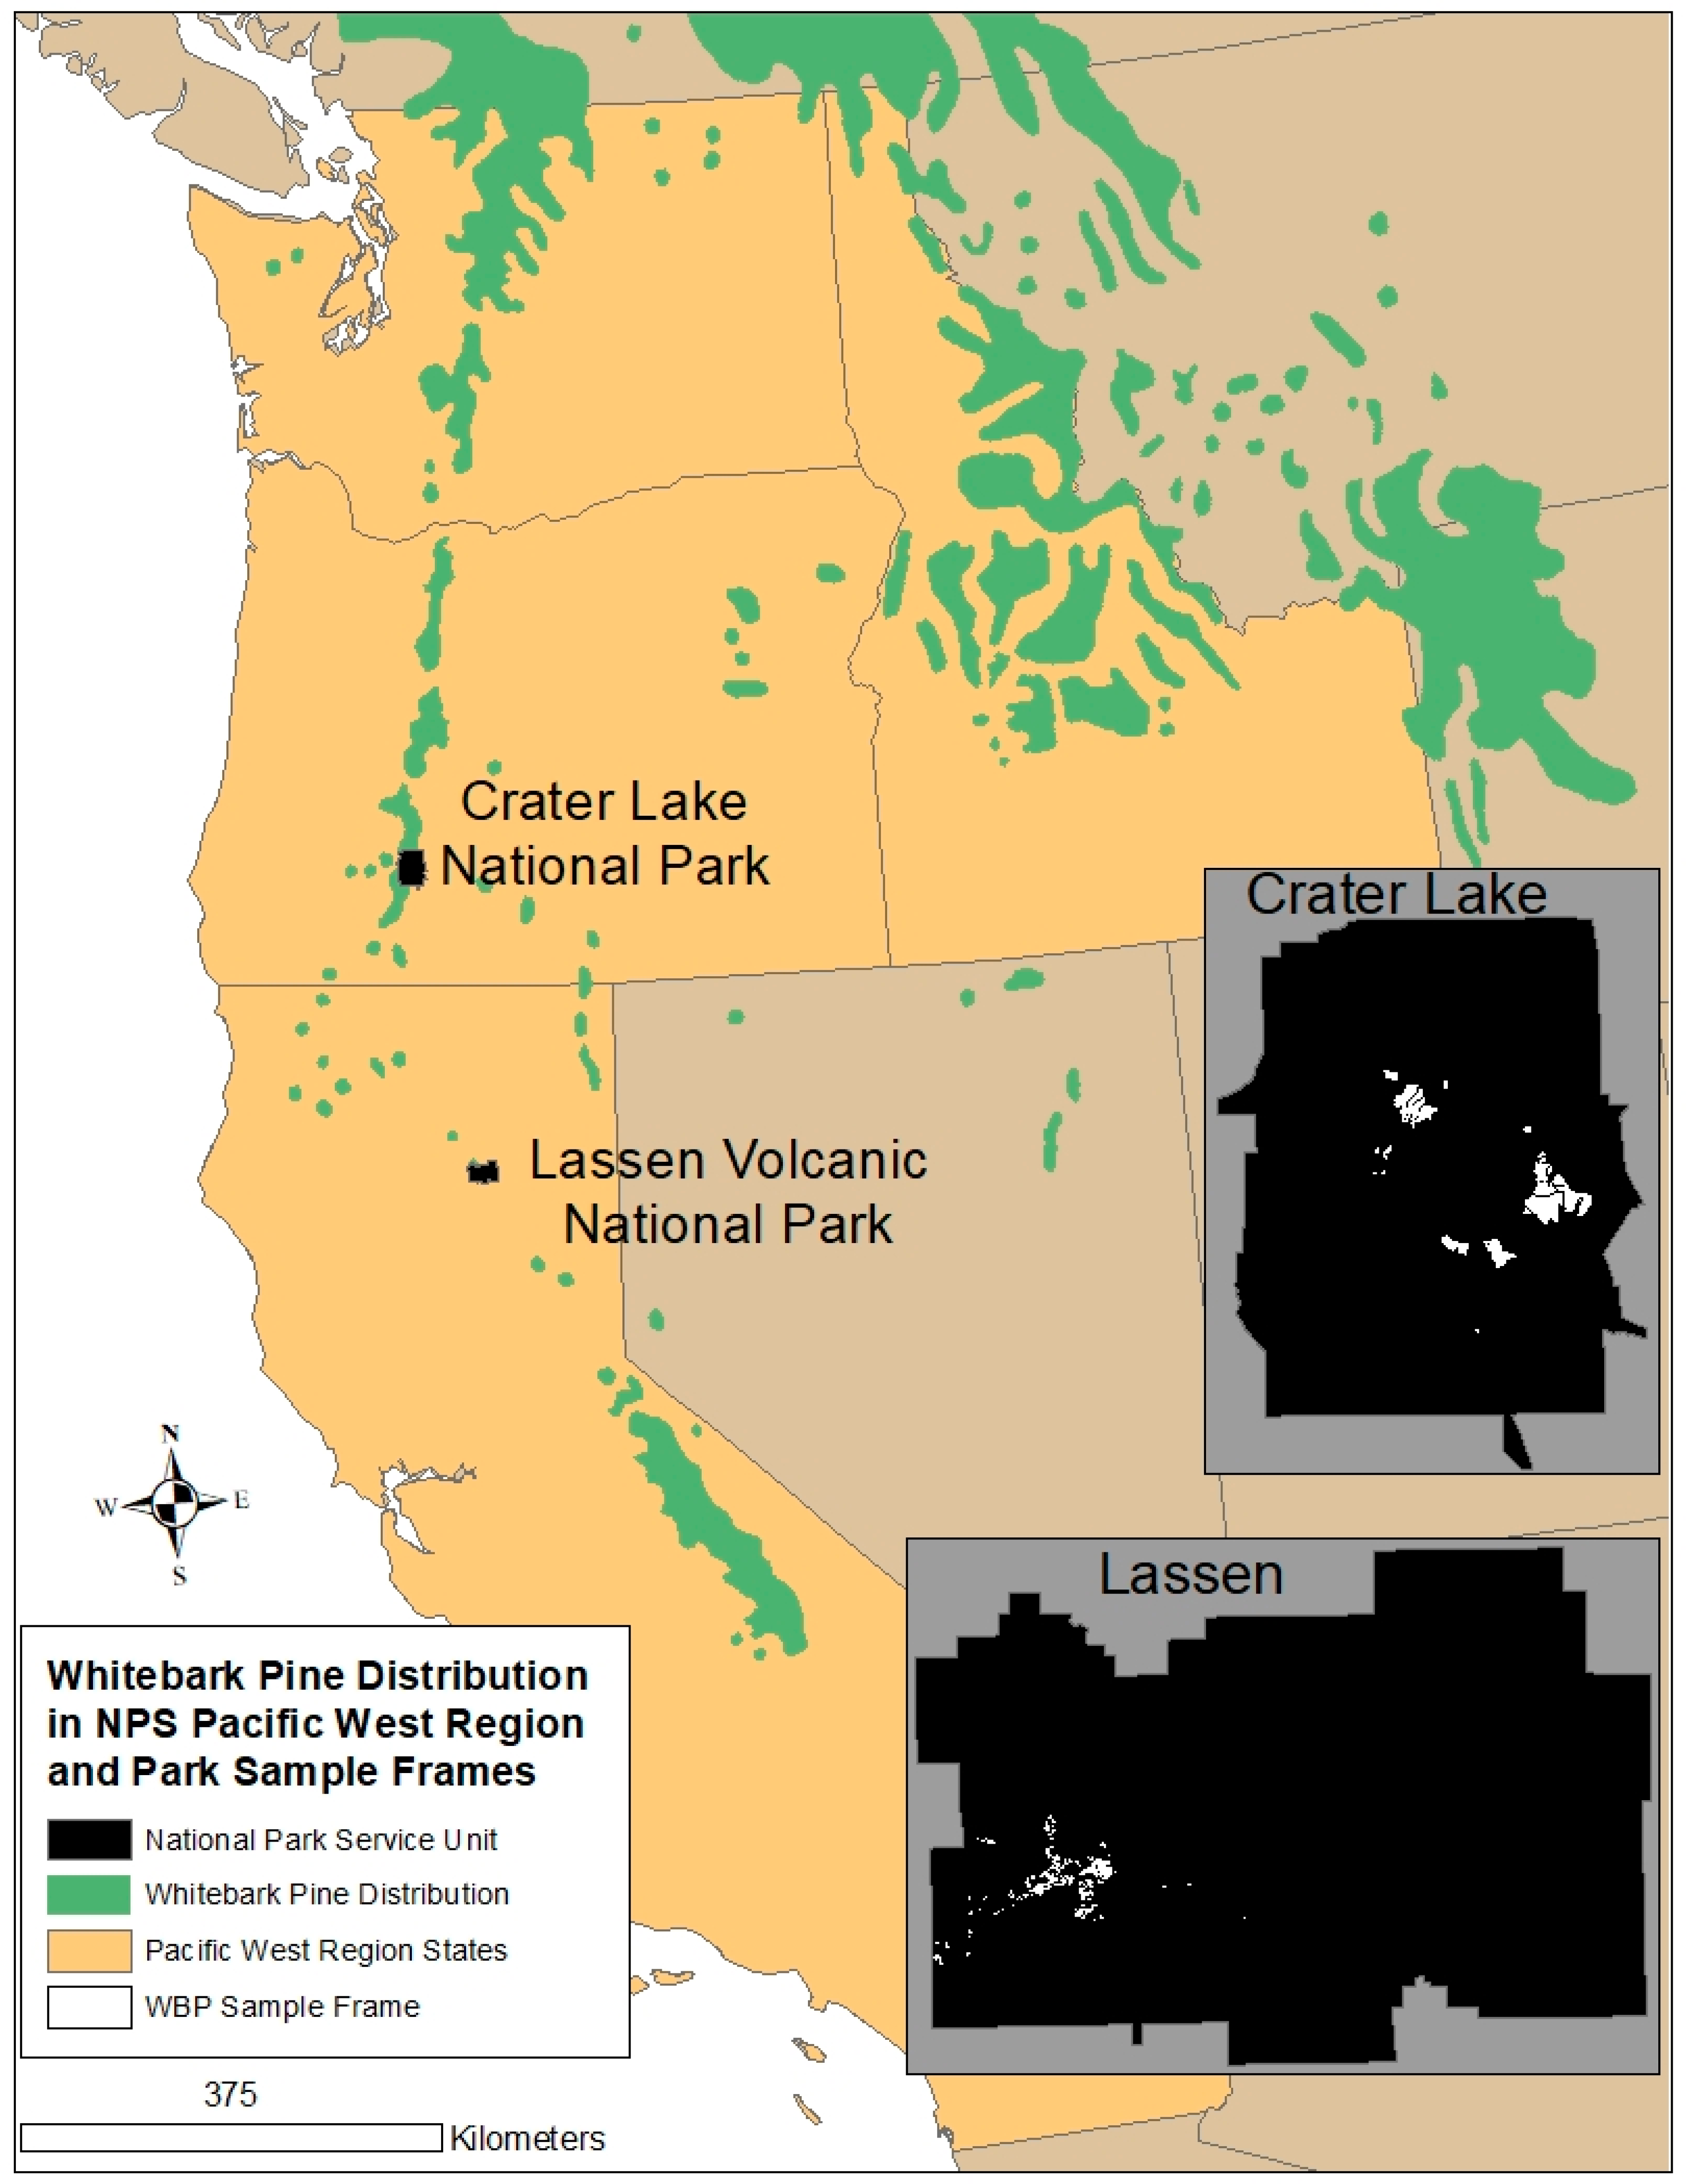 Lassen Volcanic National Park (U.S. National Park Service)